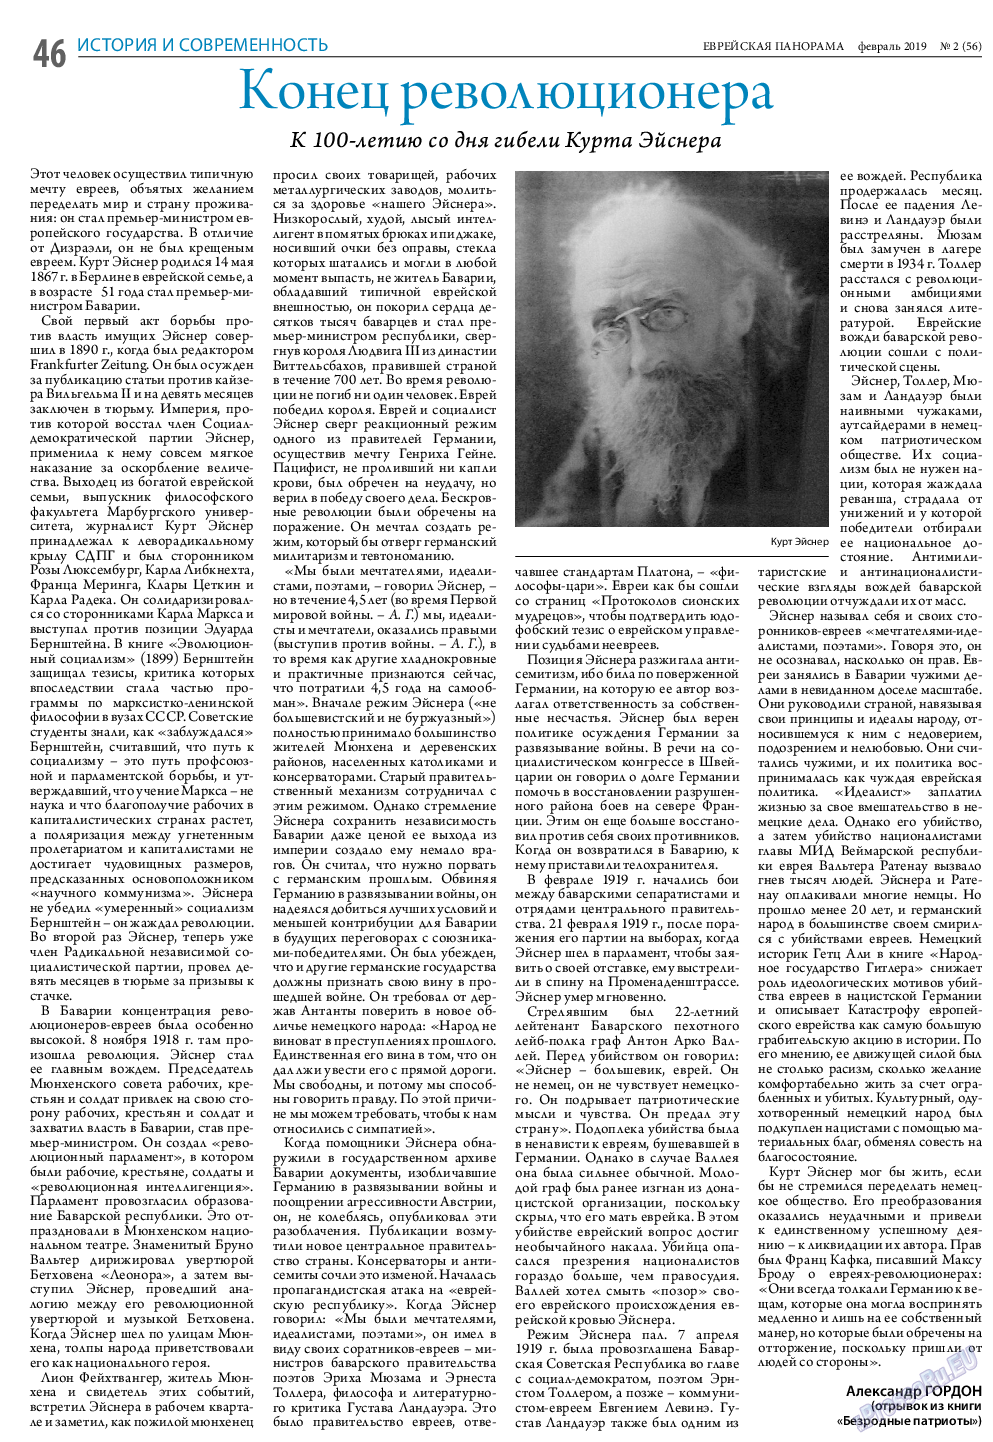 Еврейская панорама, газета. 2019 №2 стр.46